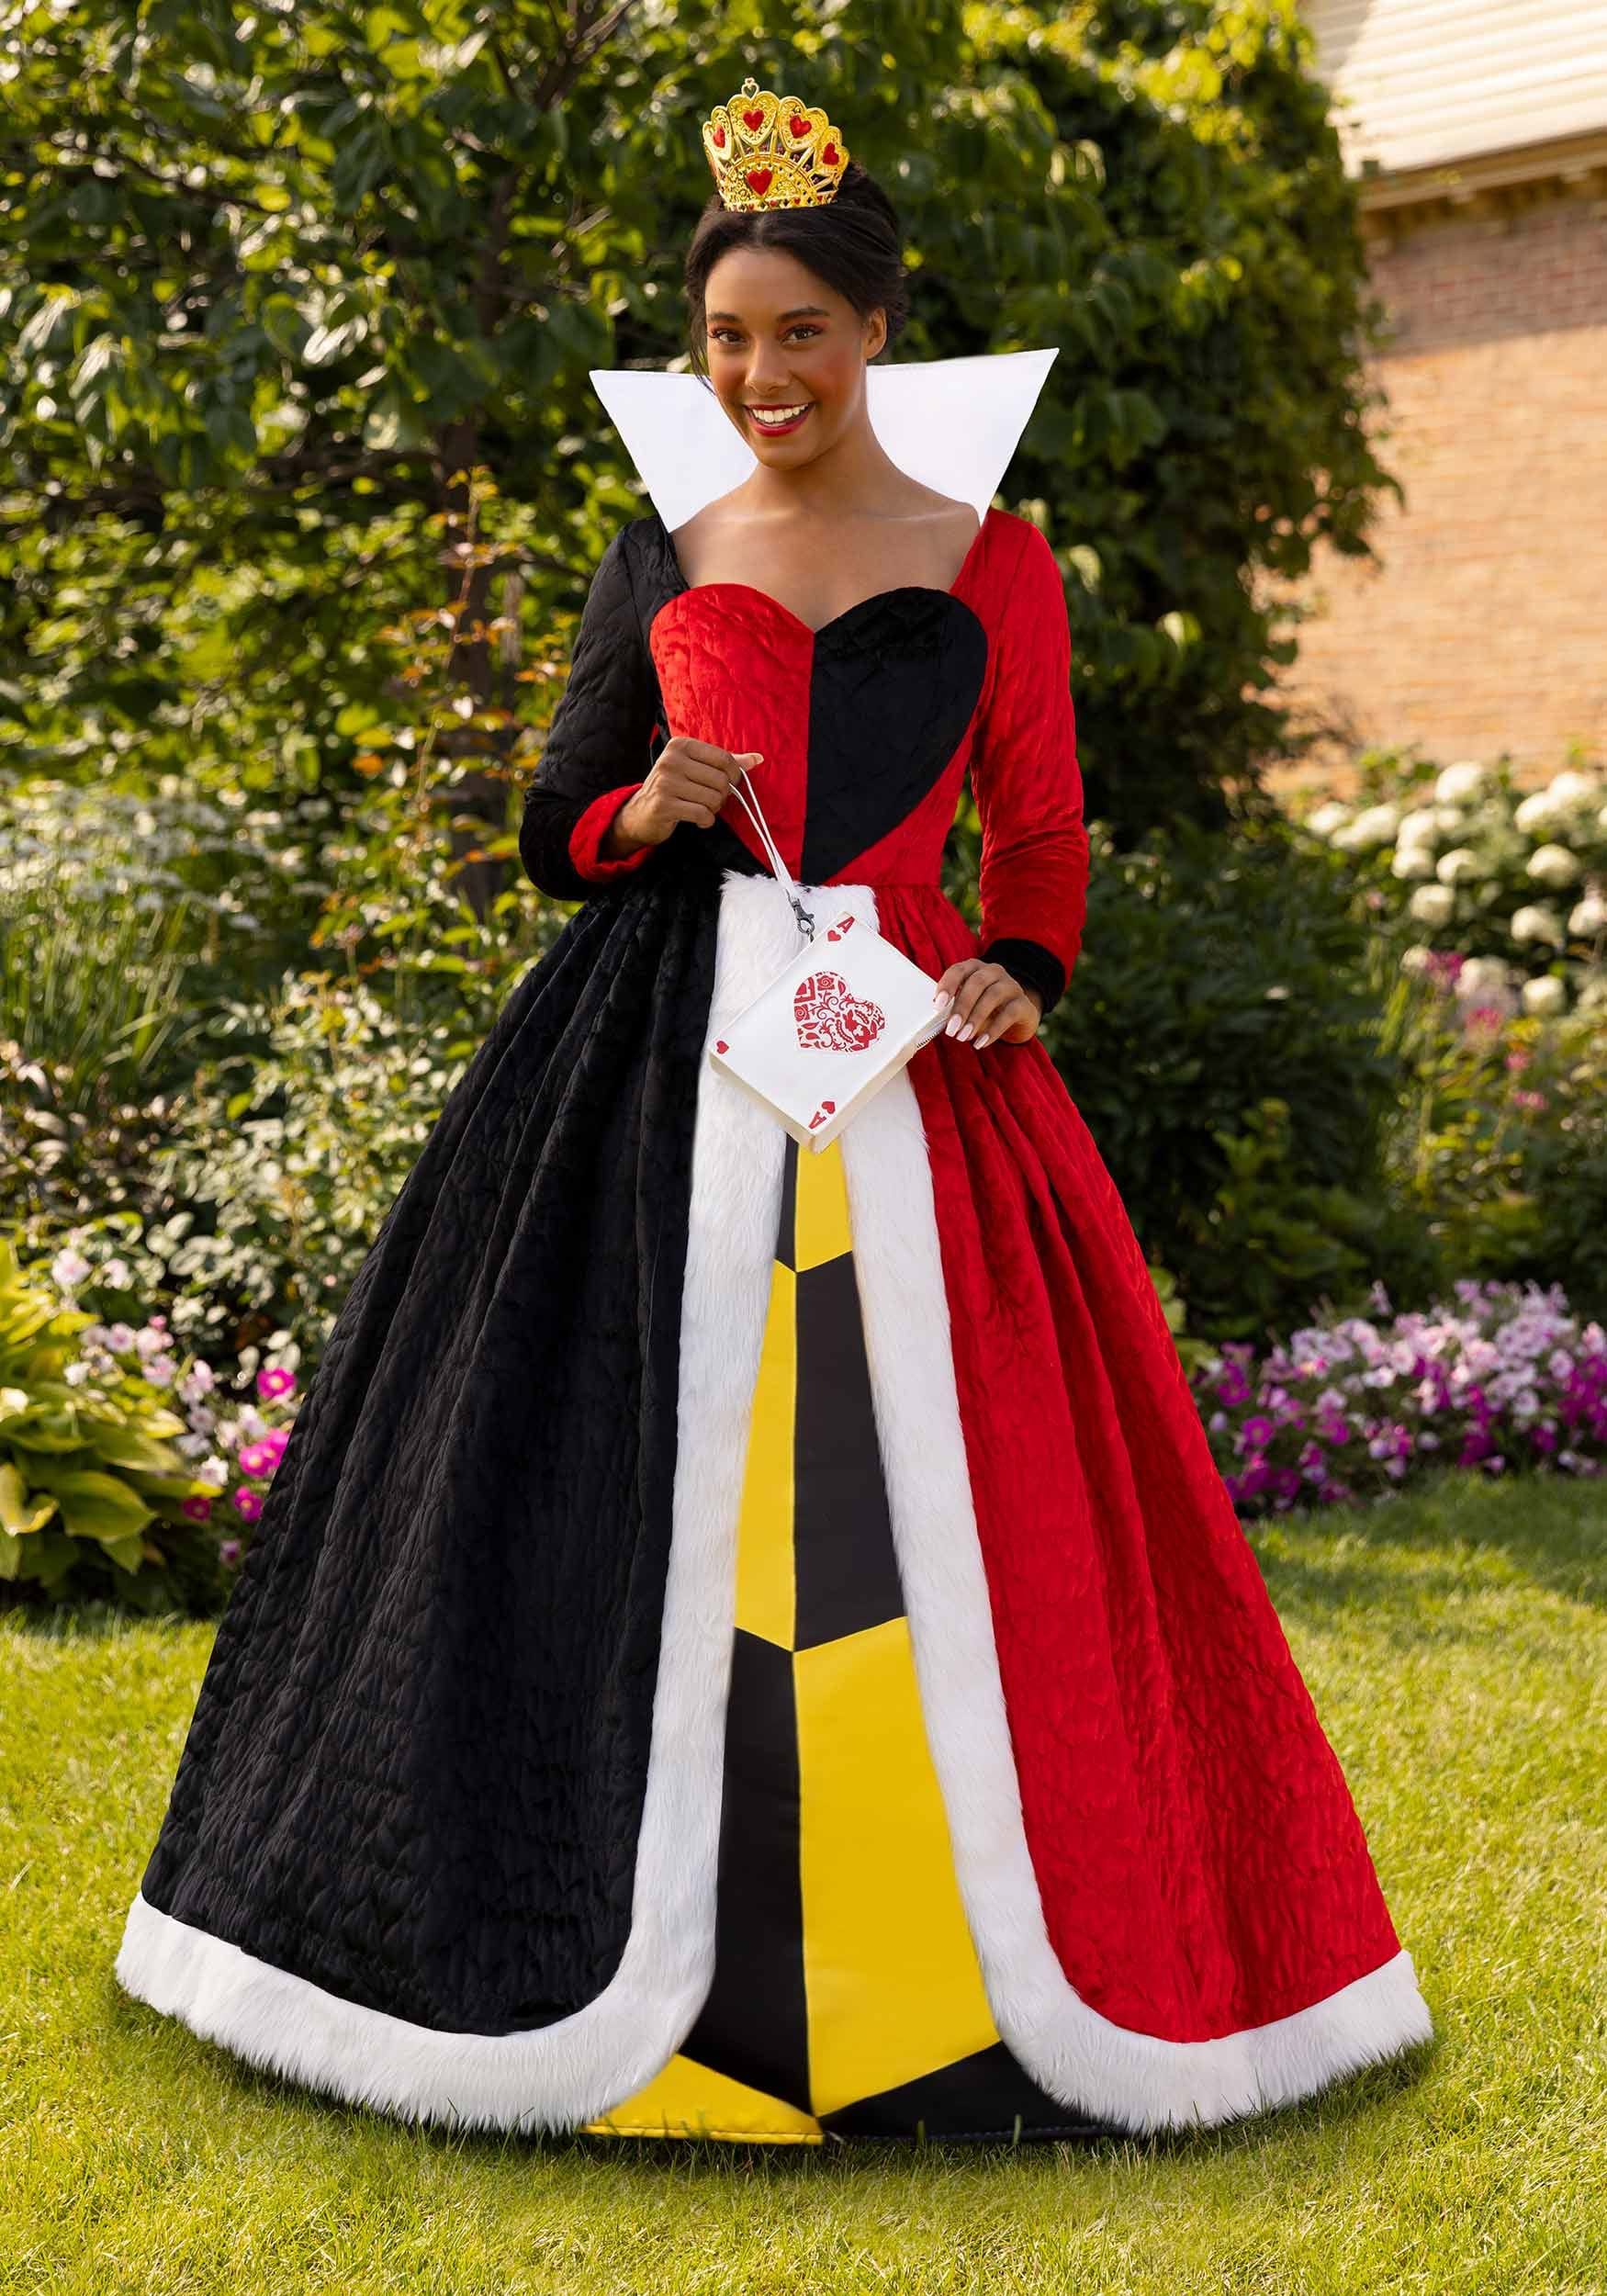 Authentic Disney Queen Of Hearts Costume For Women